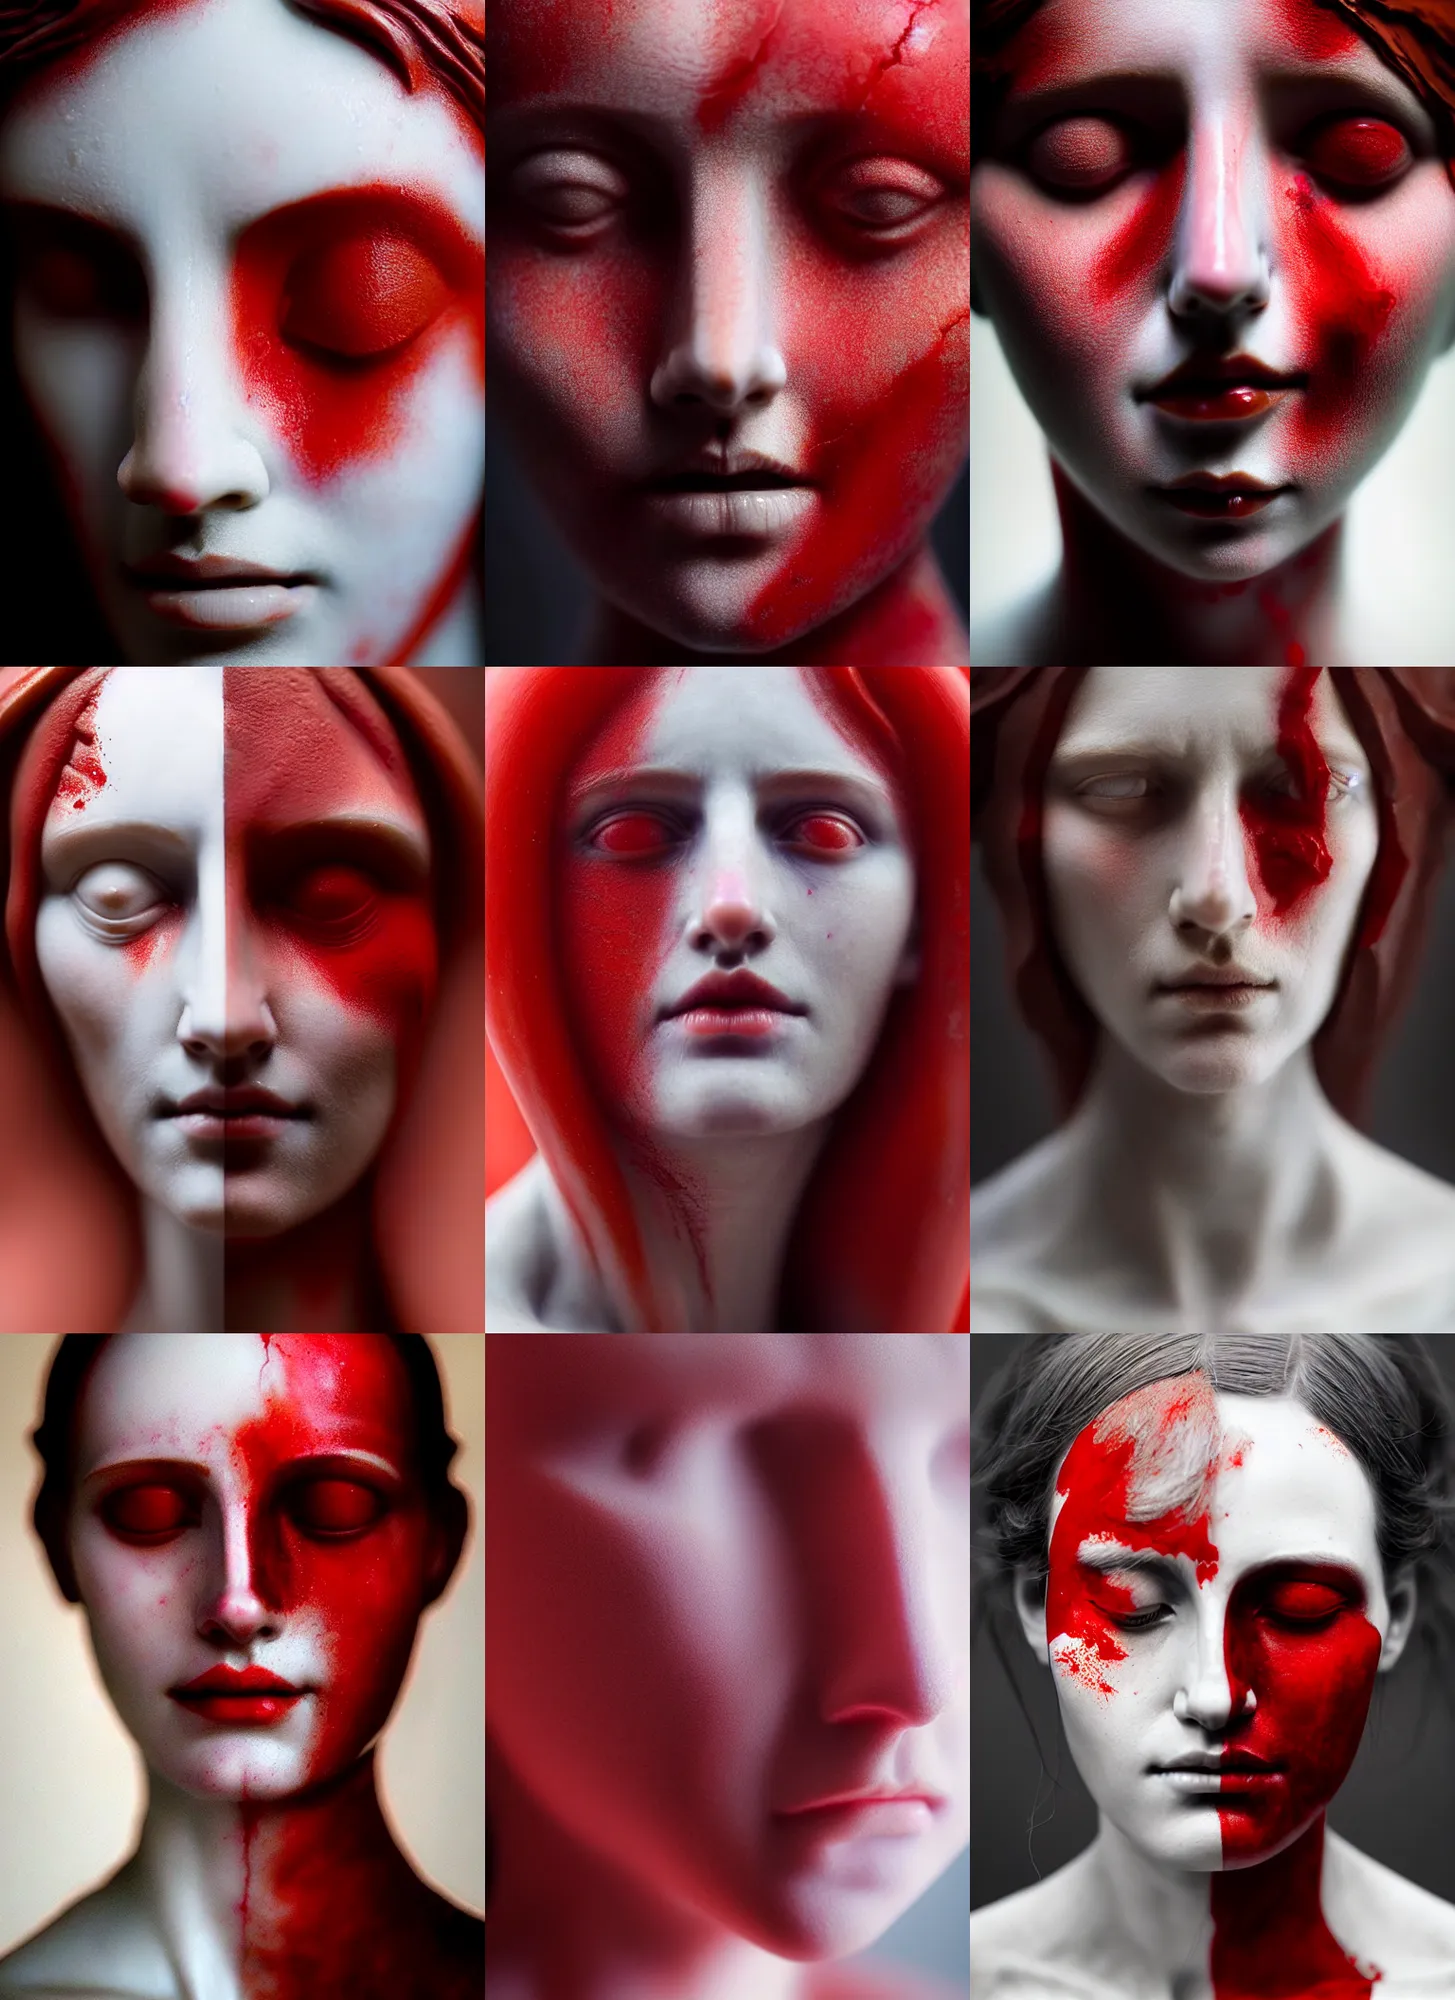 Prompt: beautiful closeup portrait of a ethereal woman red paint half face, marble sculpture by greg rutkowski, josan gonzalez, rodin, michelangelo, cinematography by christopher nolan, imaginative, creative, emotion : madness